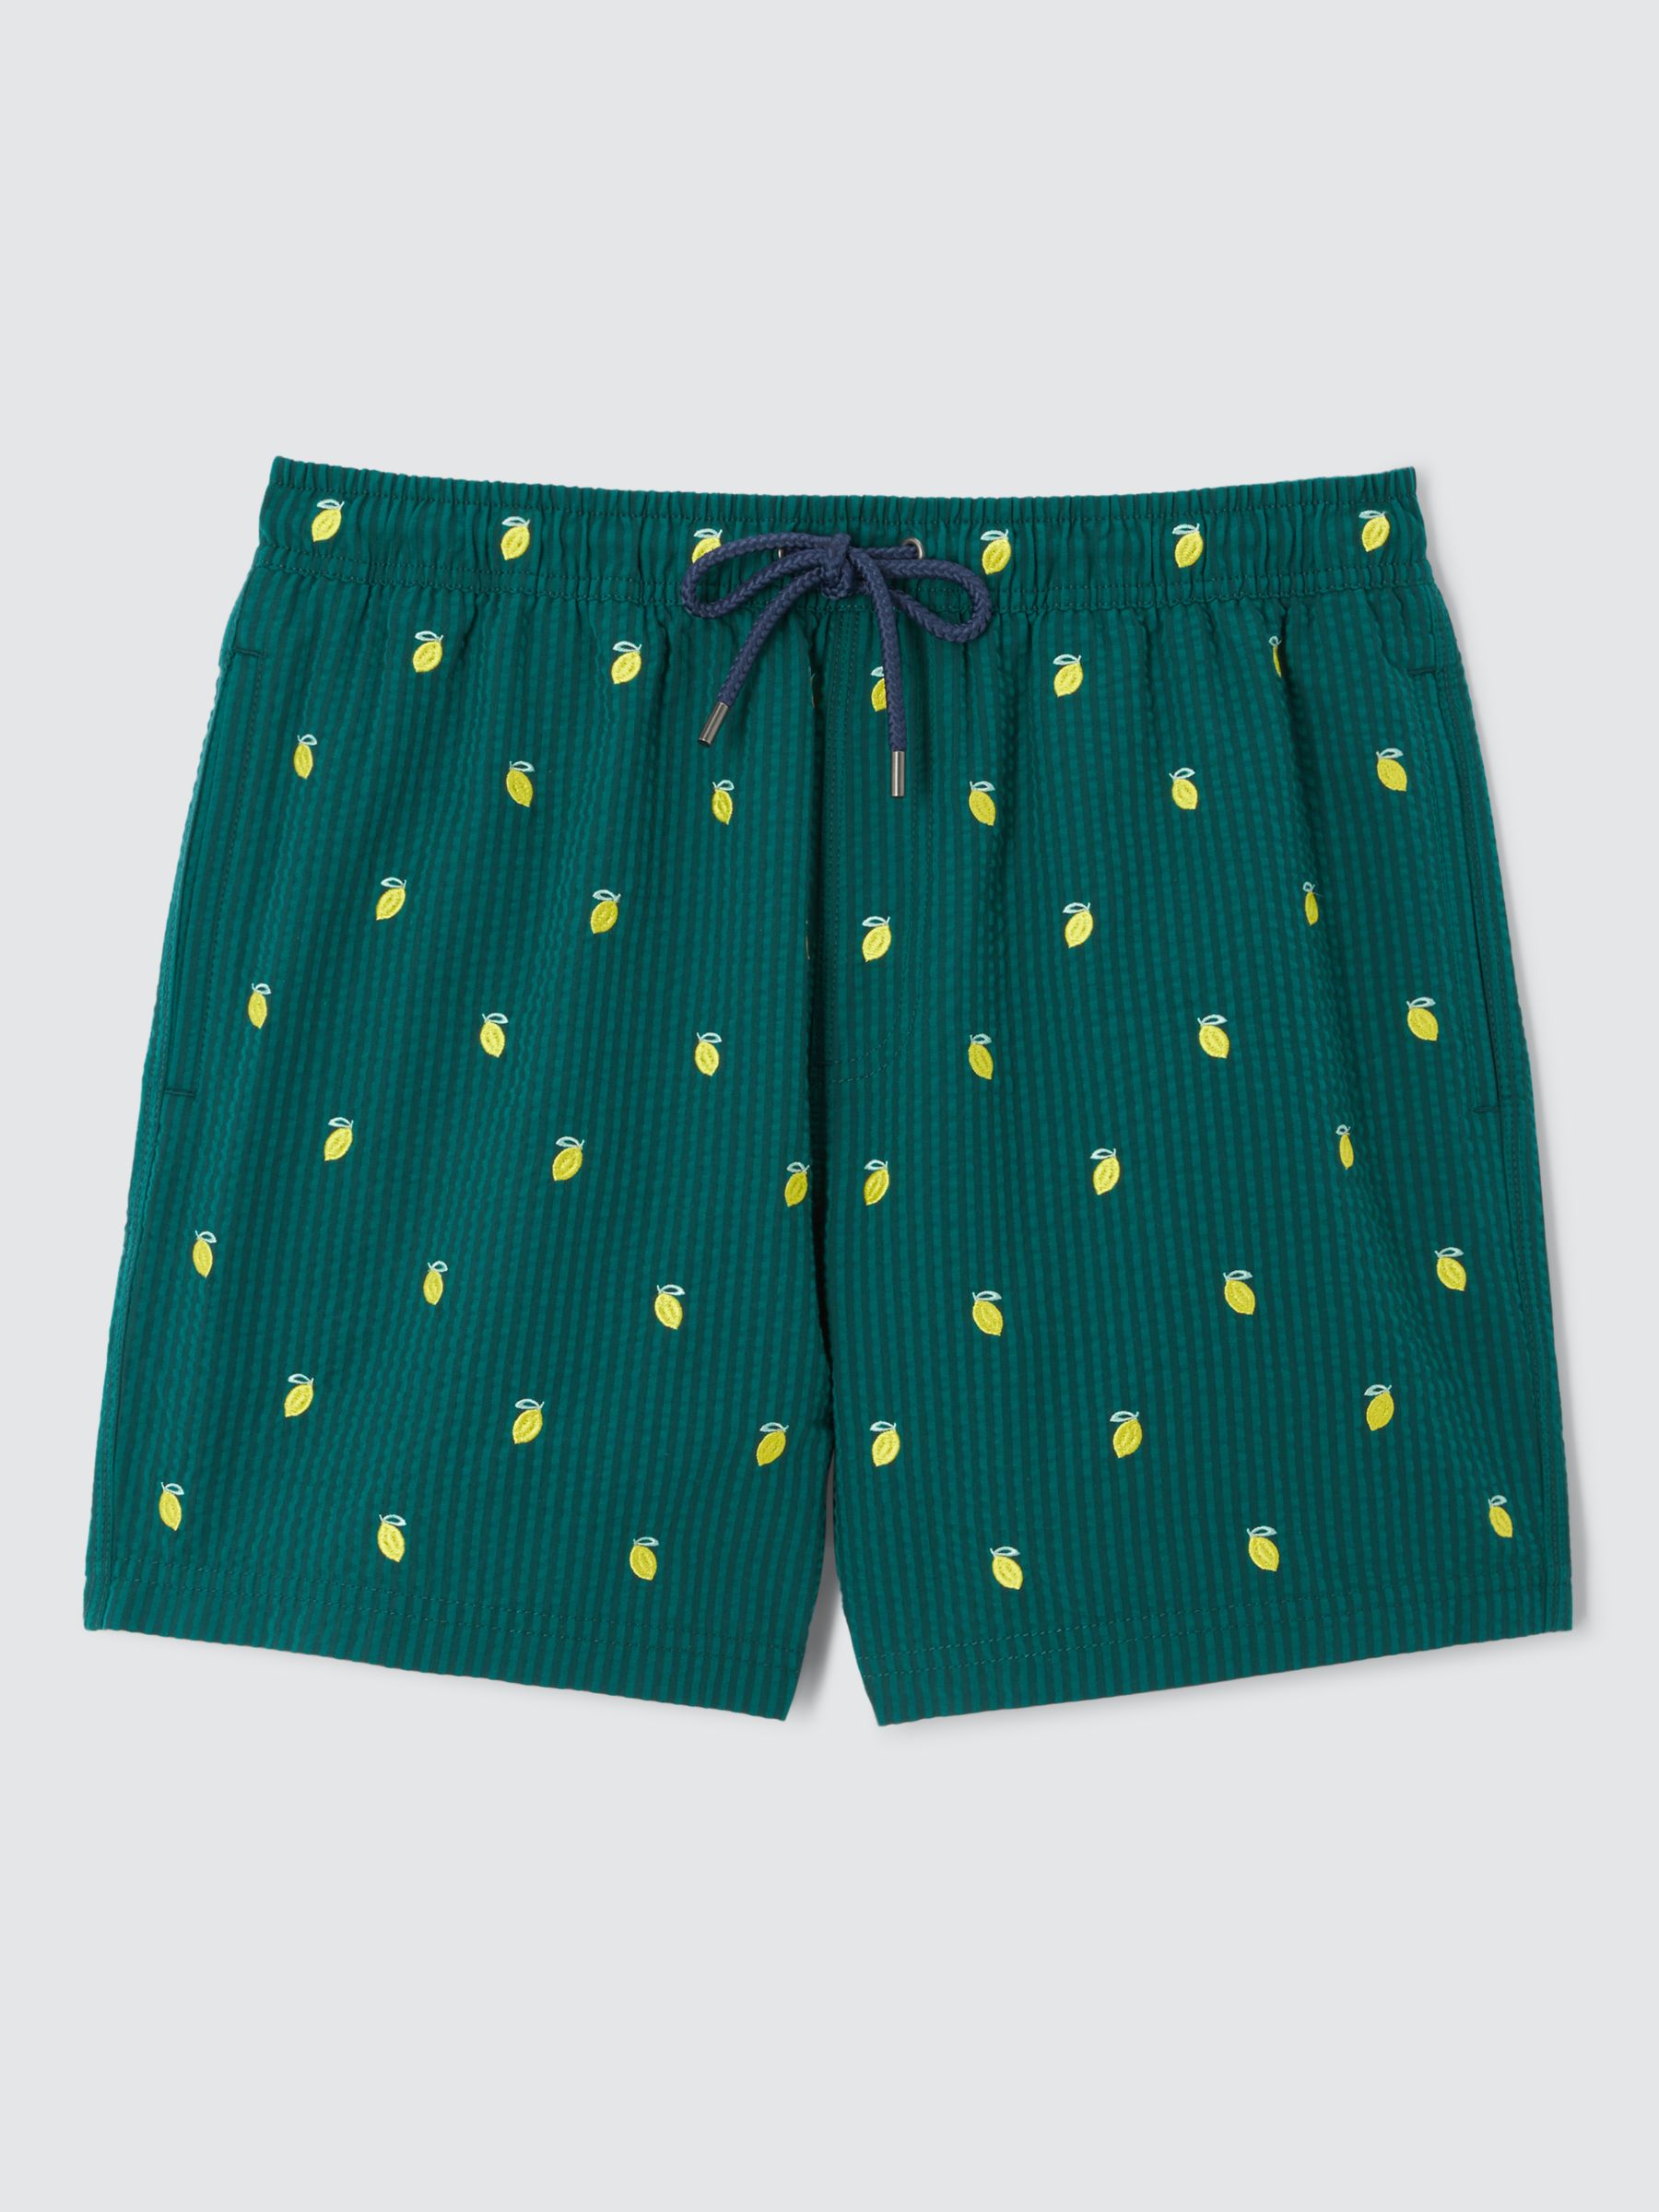 John Lewis Embroidered Seersucker Lemon Swim Shorts, Green/Multi, S